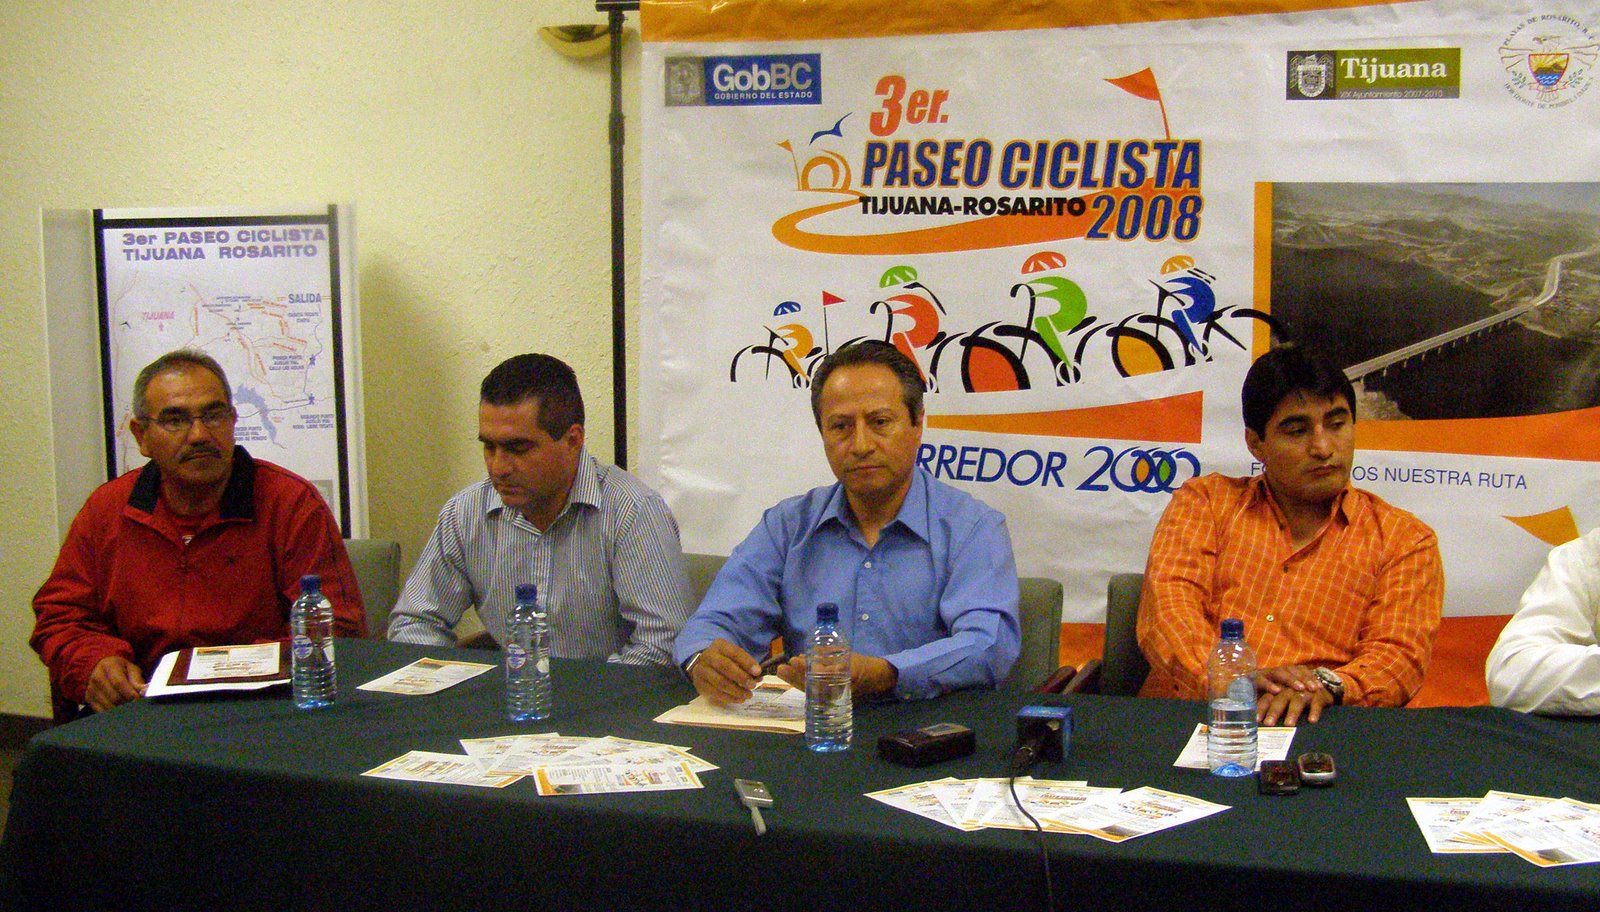 [Presentaron_el_3er_Paseo_Ciclista_Tijuana_-_Rosarito.jpg]